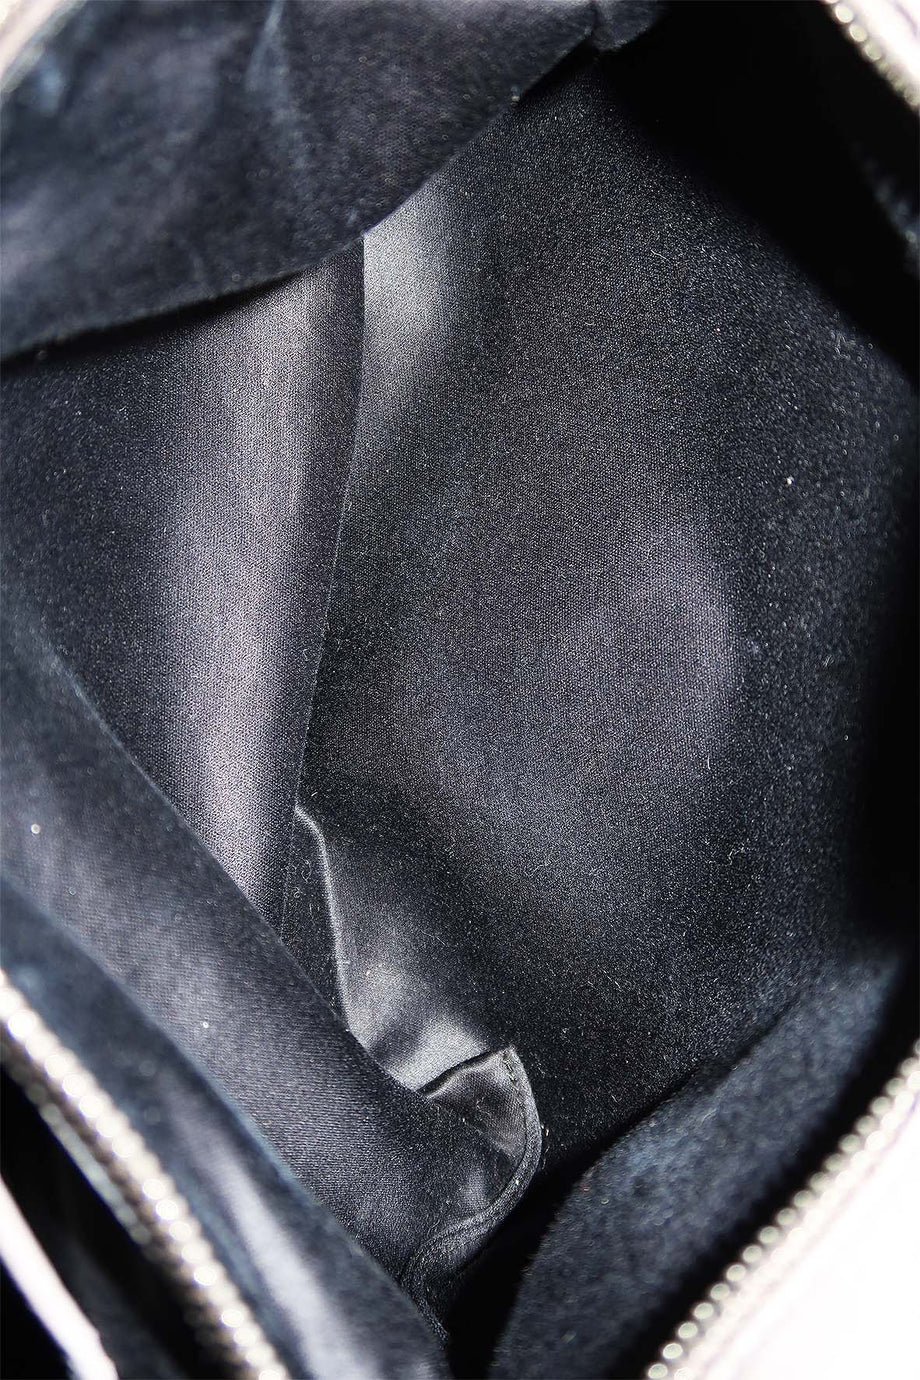 Vitello Lux Mini Bow Bag Black with Silver Hardware – Style Theory SG